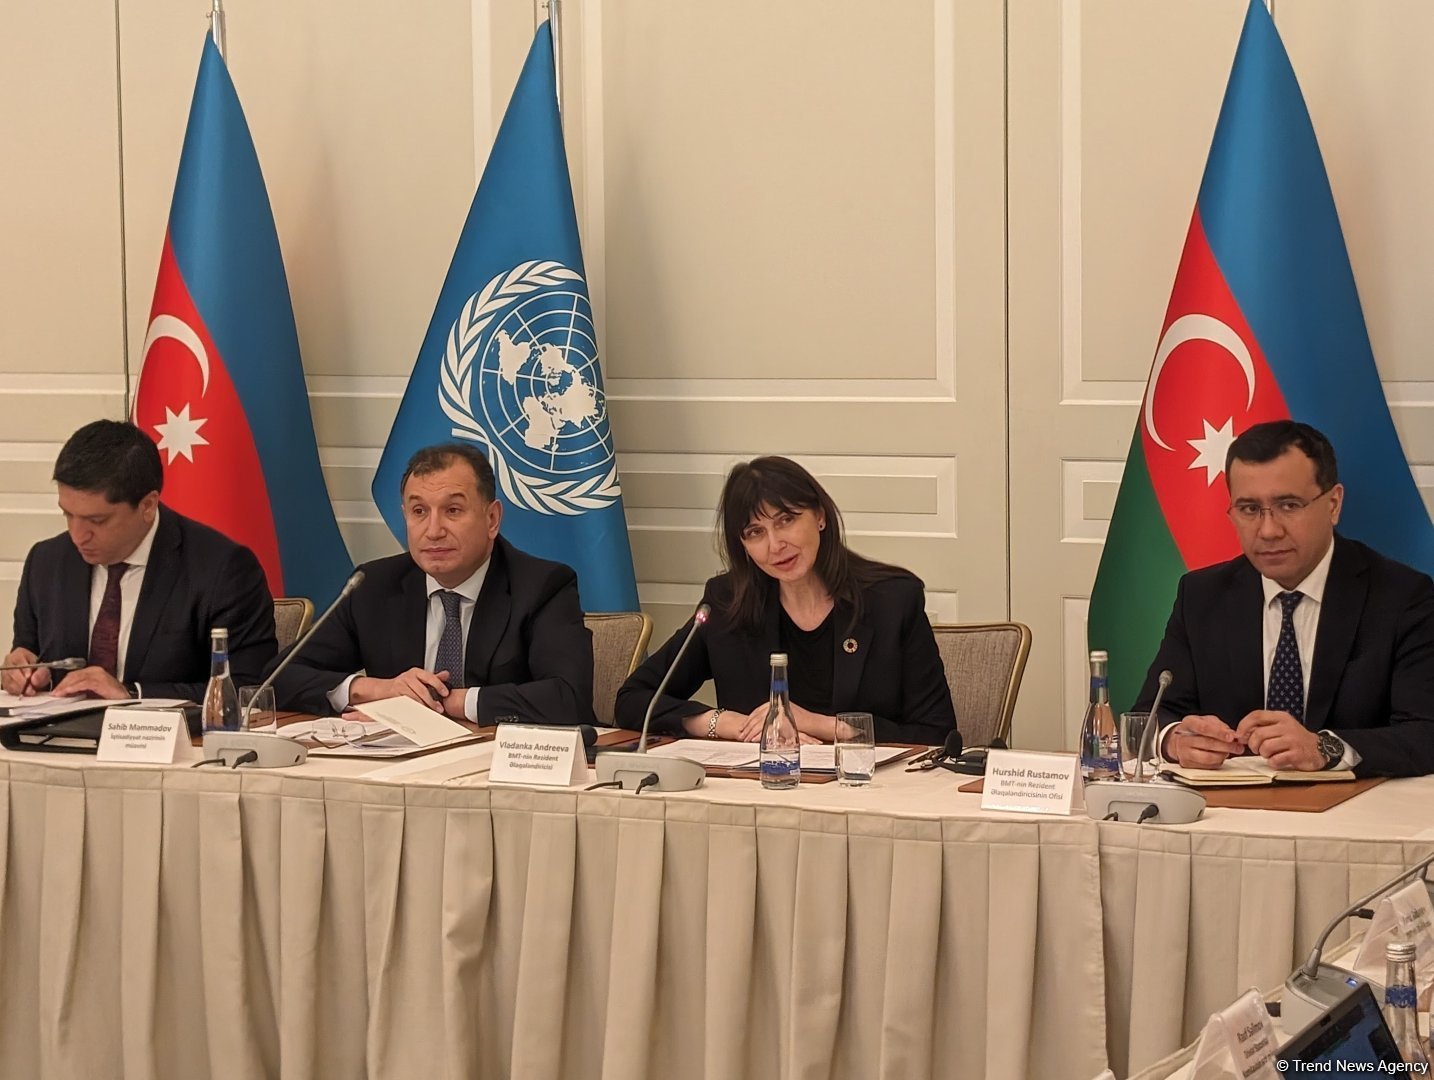 UN allocates tens of millions for joint activities with Azerbaijan - coordinator